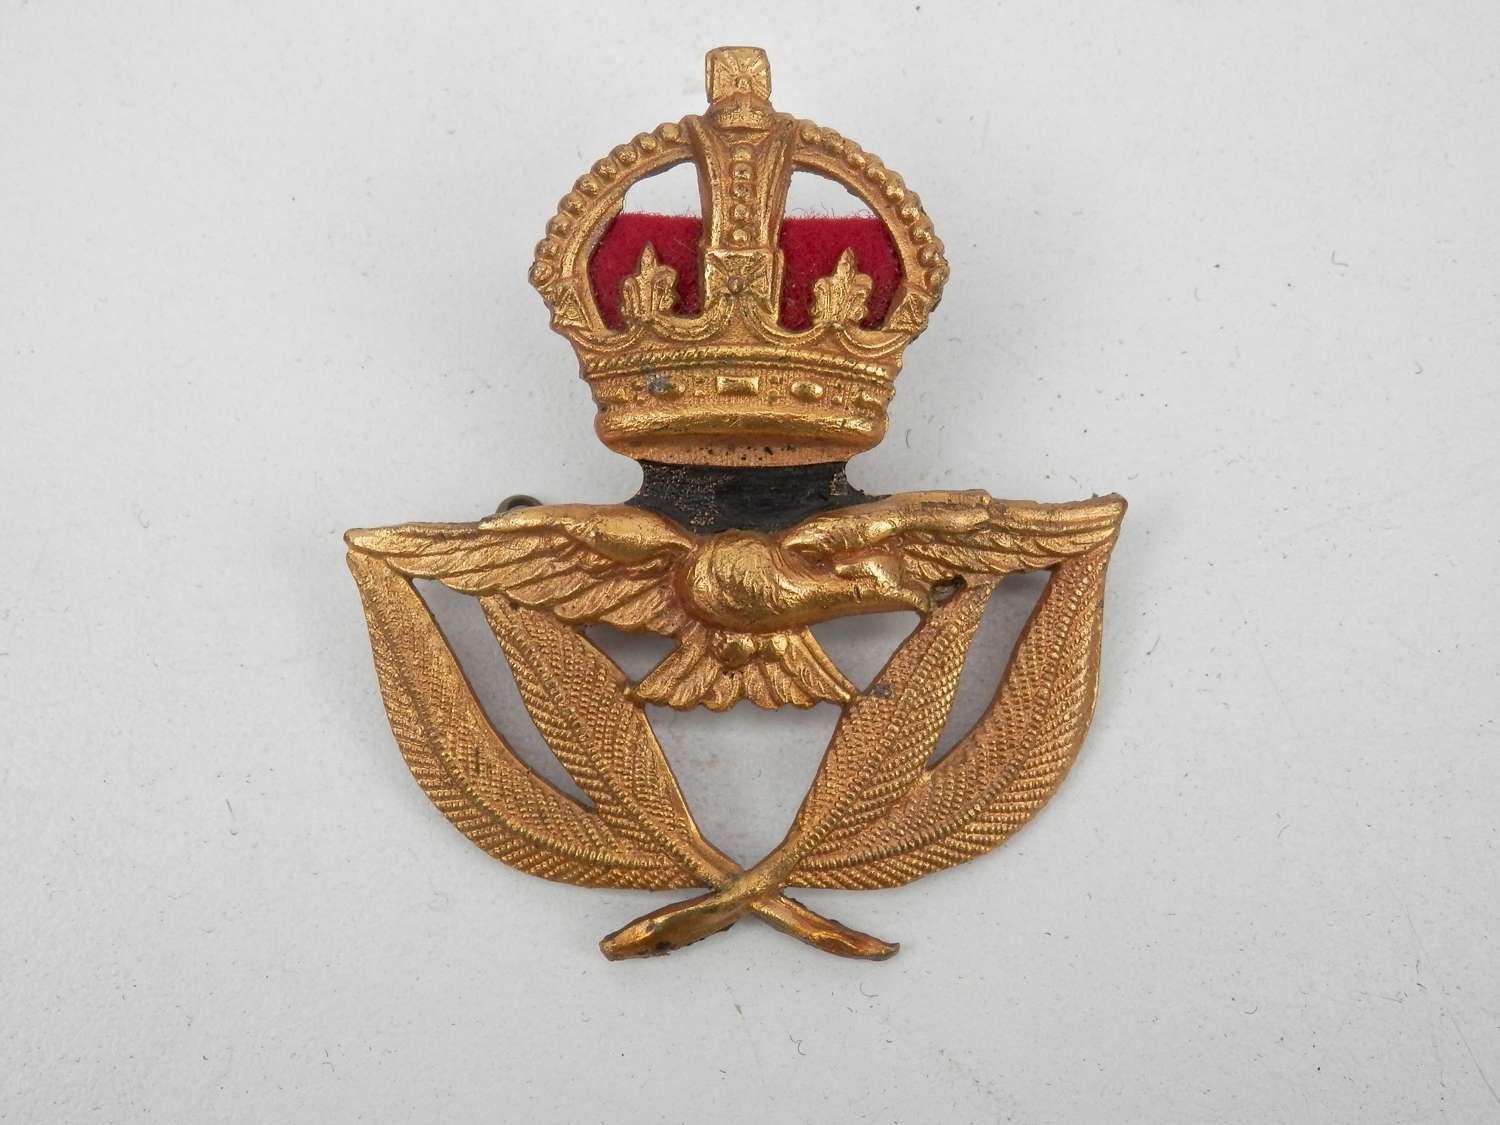 RAF warrant officer cap badge